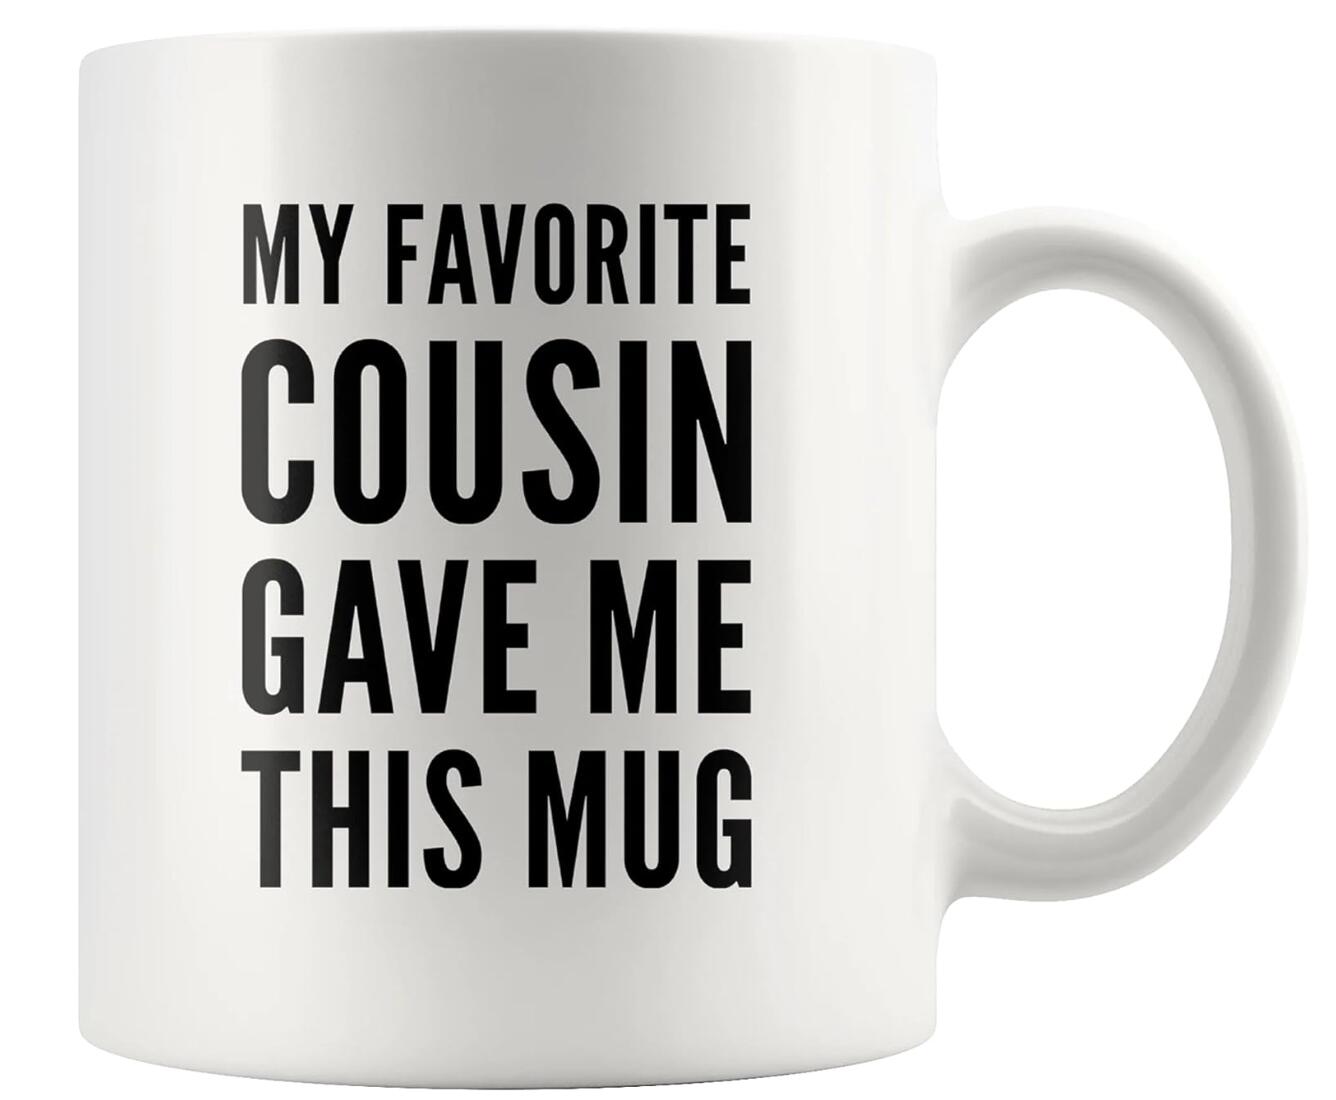 My Favorite Cousin Gave Me This Mug Coffee Mug Family Reunion Birthday Gift Cup